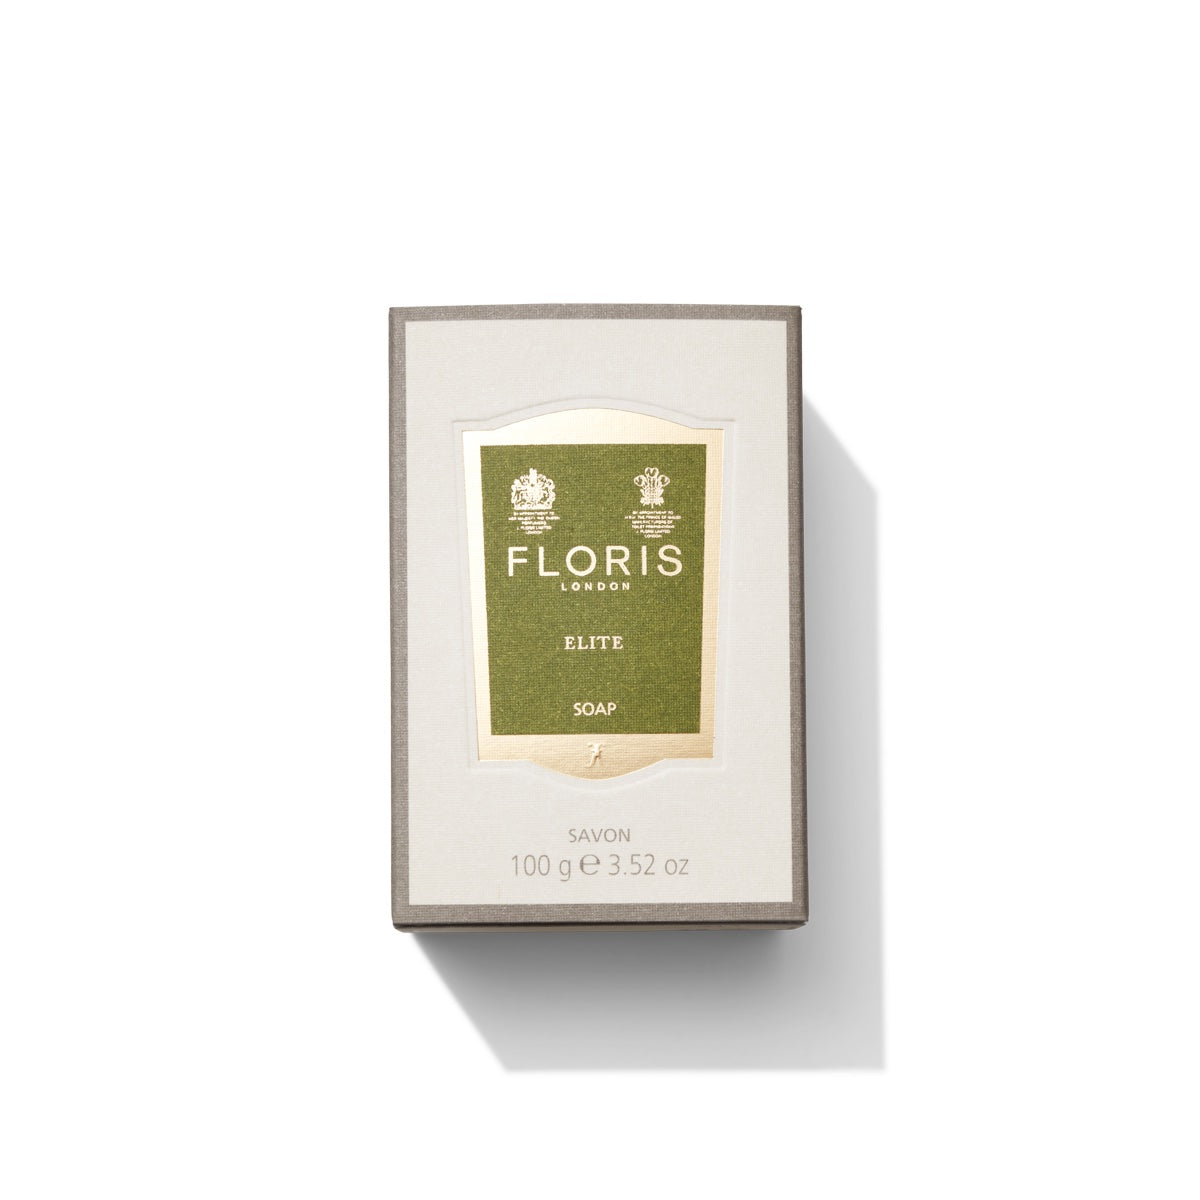 FLORIS Elite Luxury Soap (Single Bar)